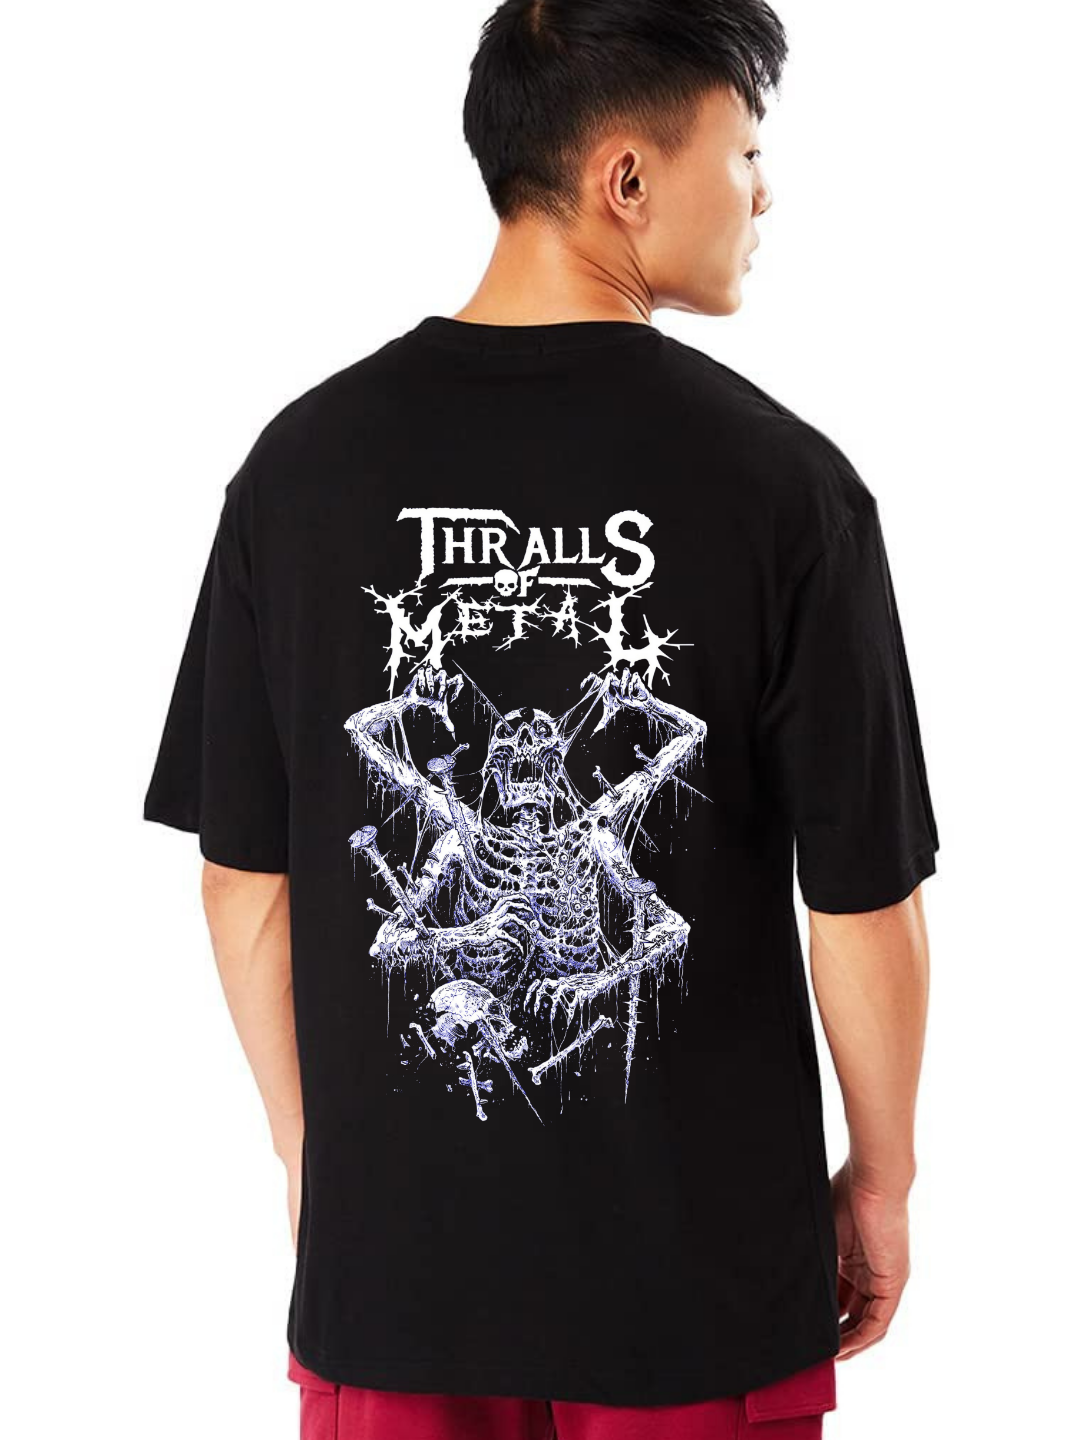 Thrils of Mental oversized T-Shirt - Black